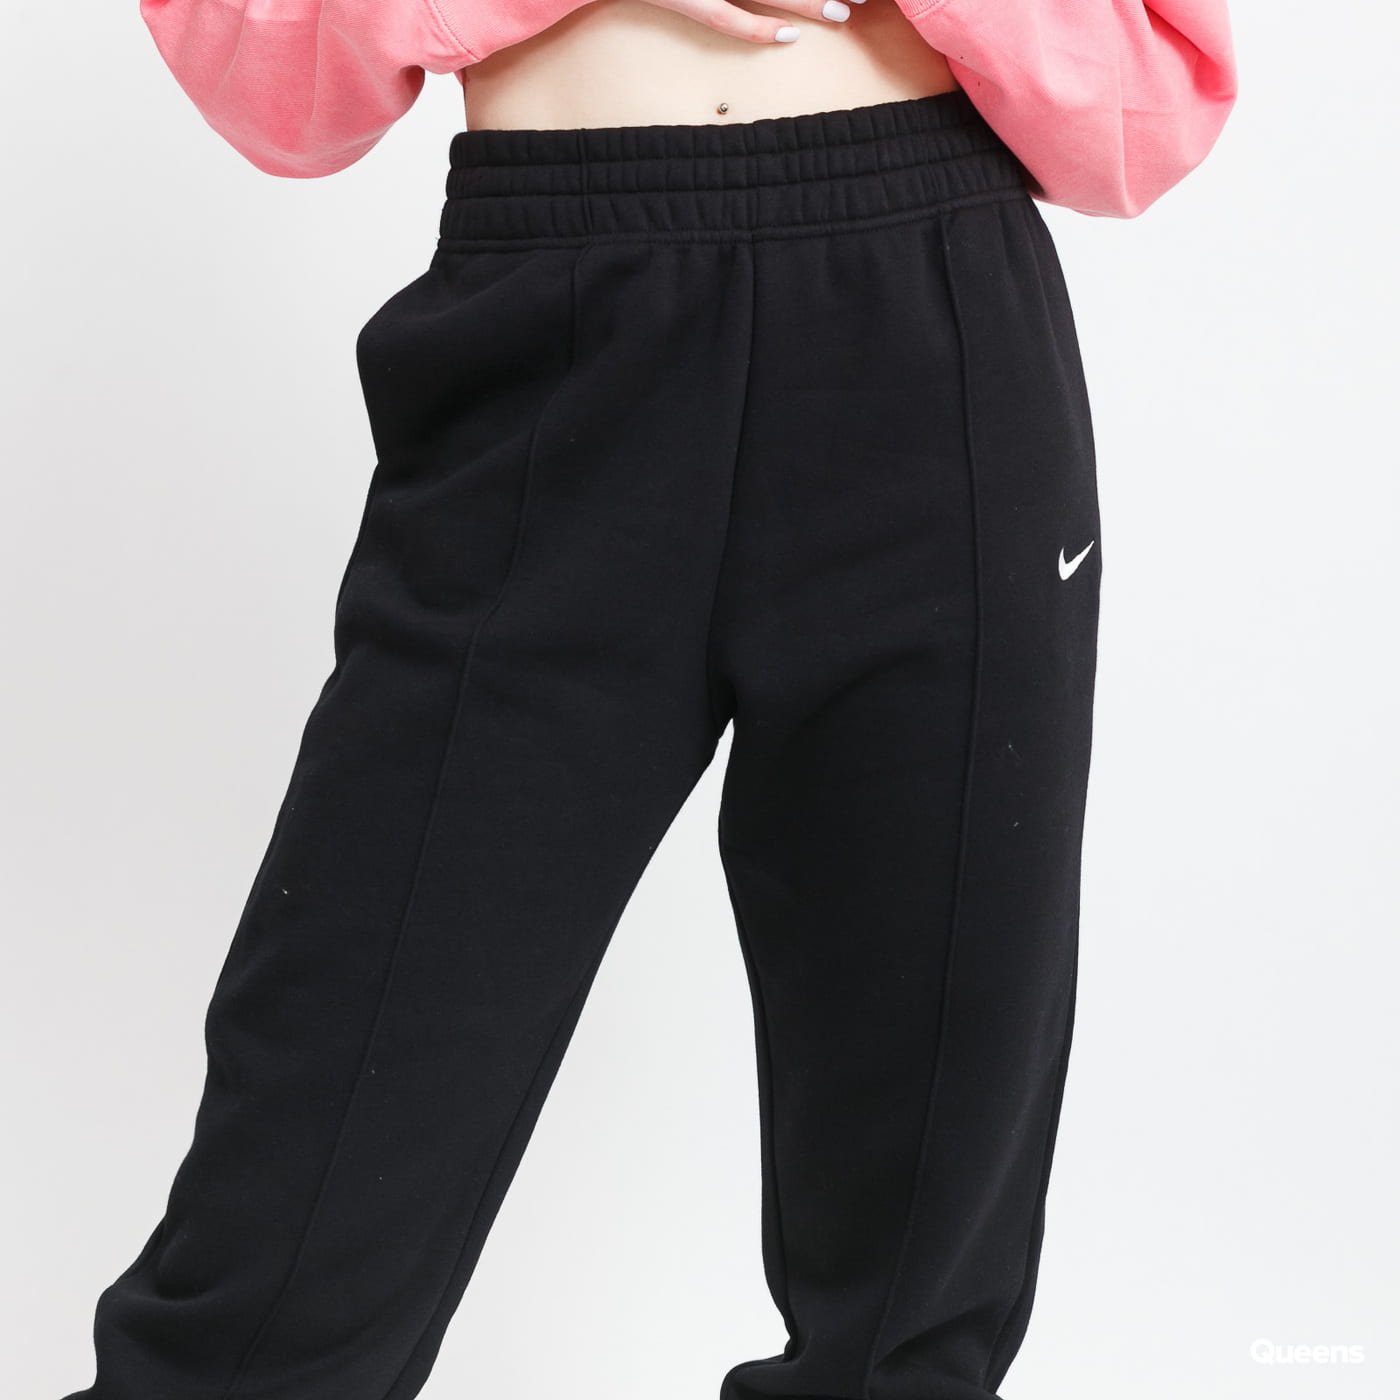 FLEXDOG Nike Sweatpants Pants | Fleece BV4089-010